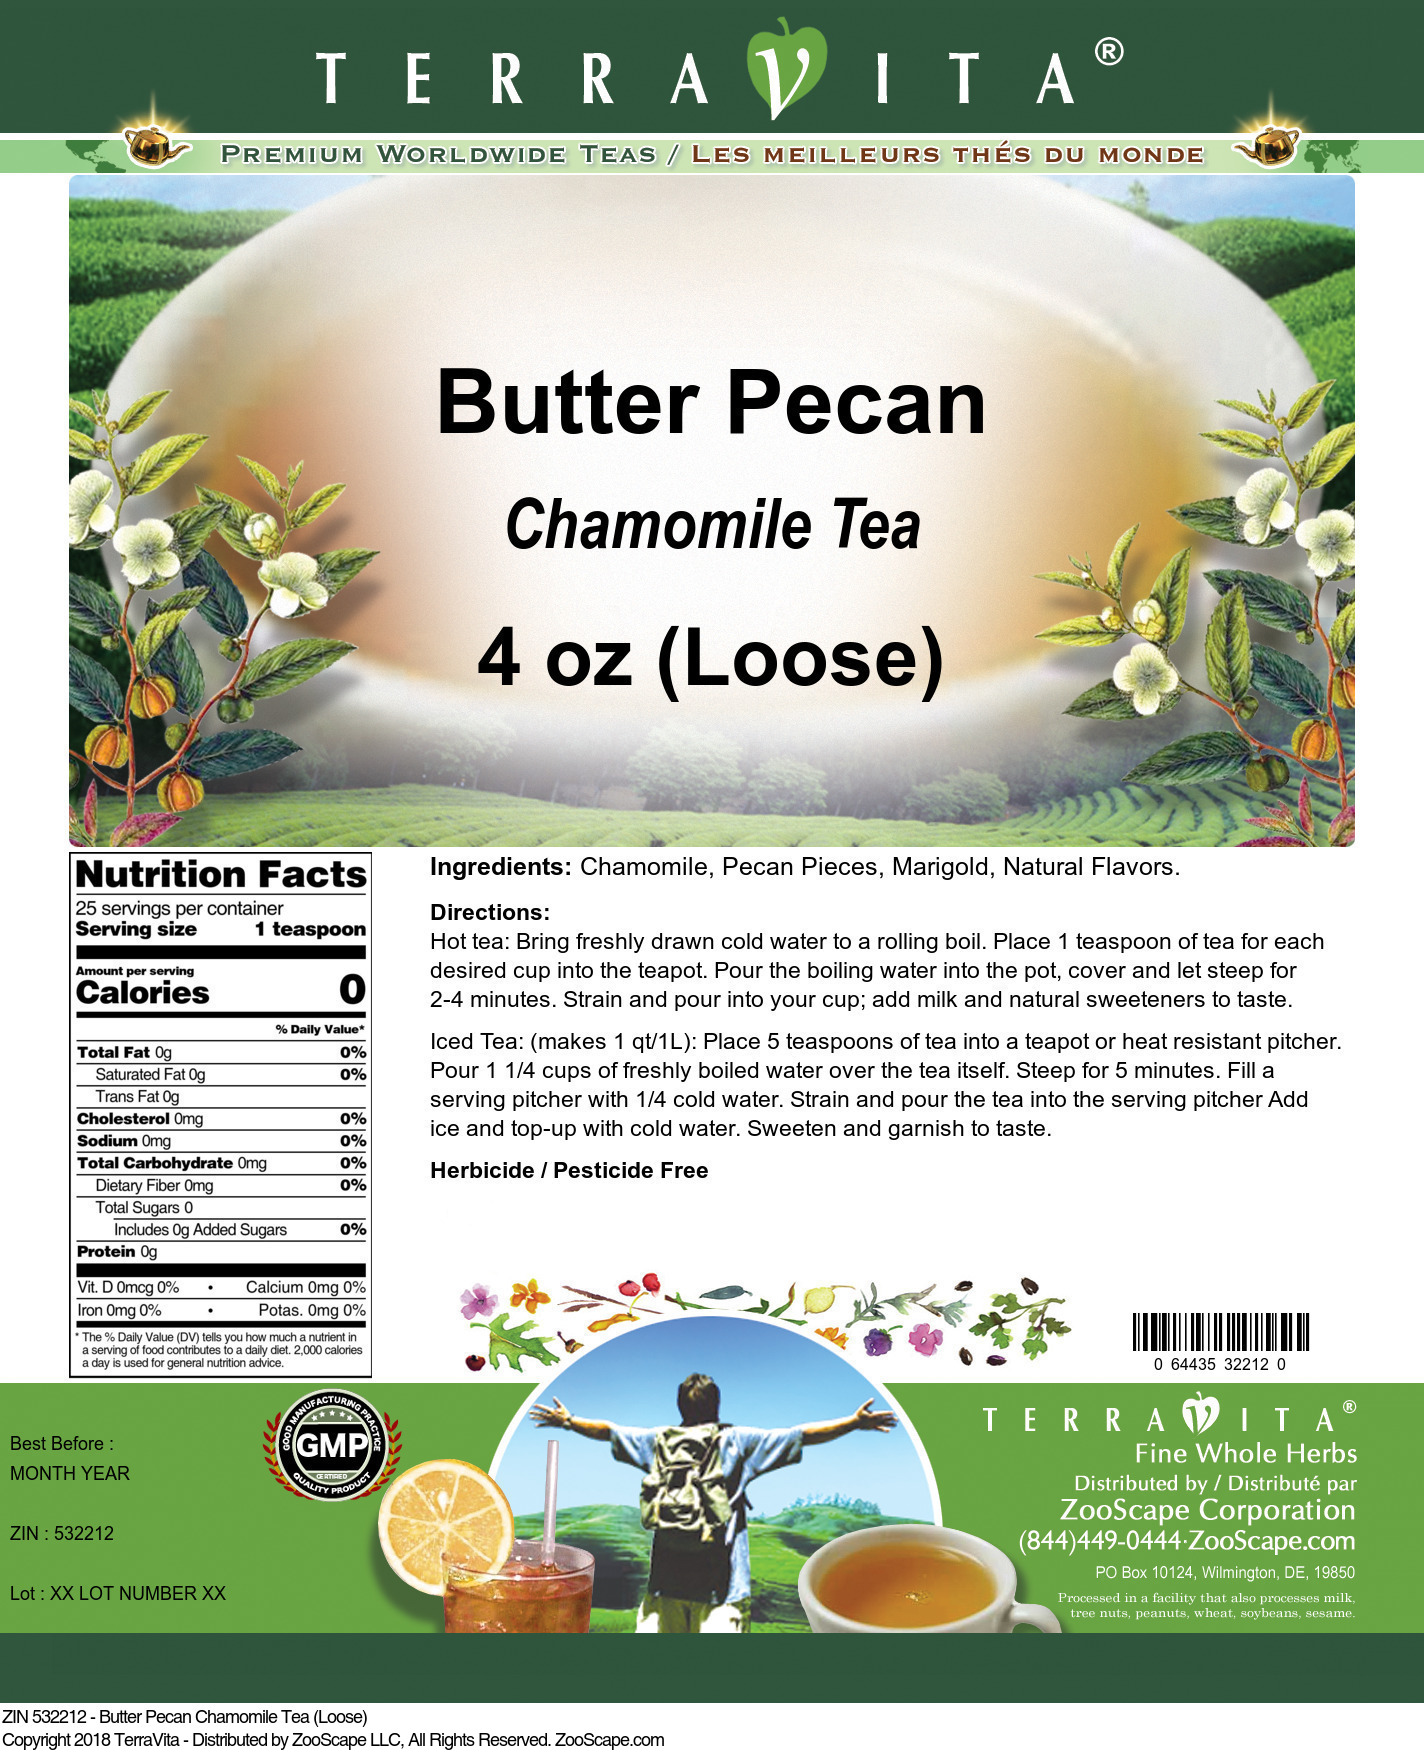 Butter Pecan Chamomile Tea (Loose) - Label